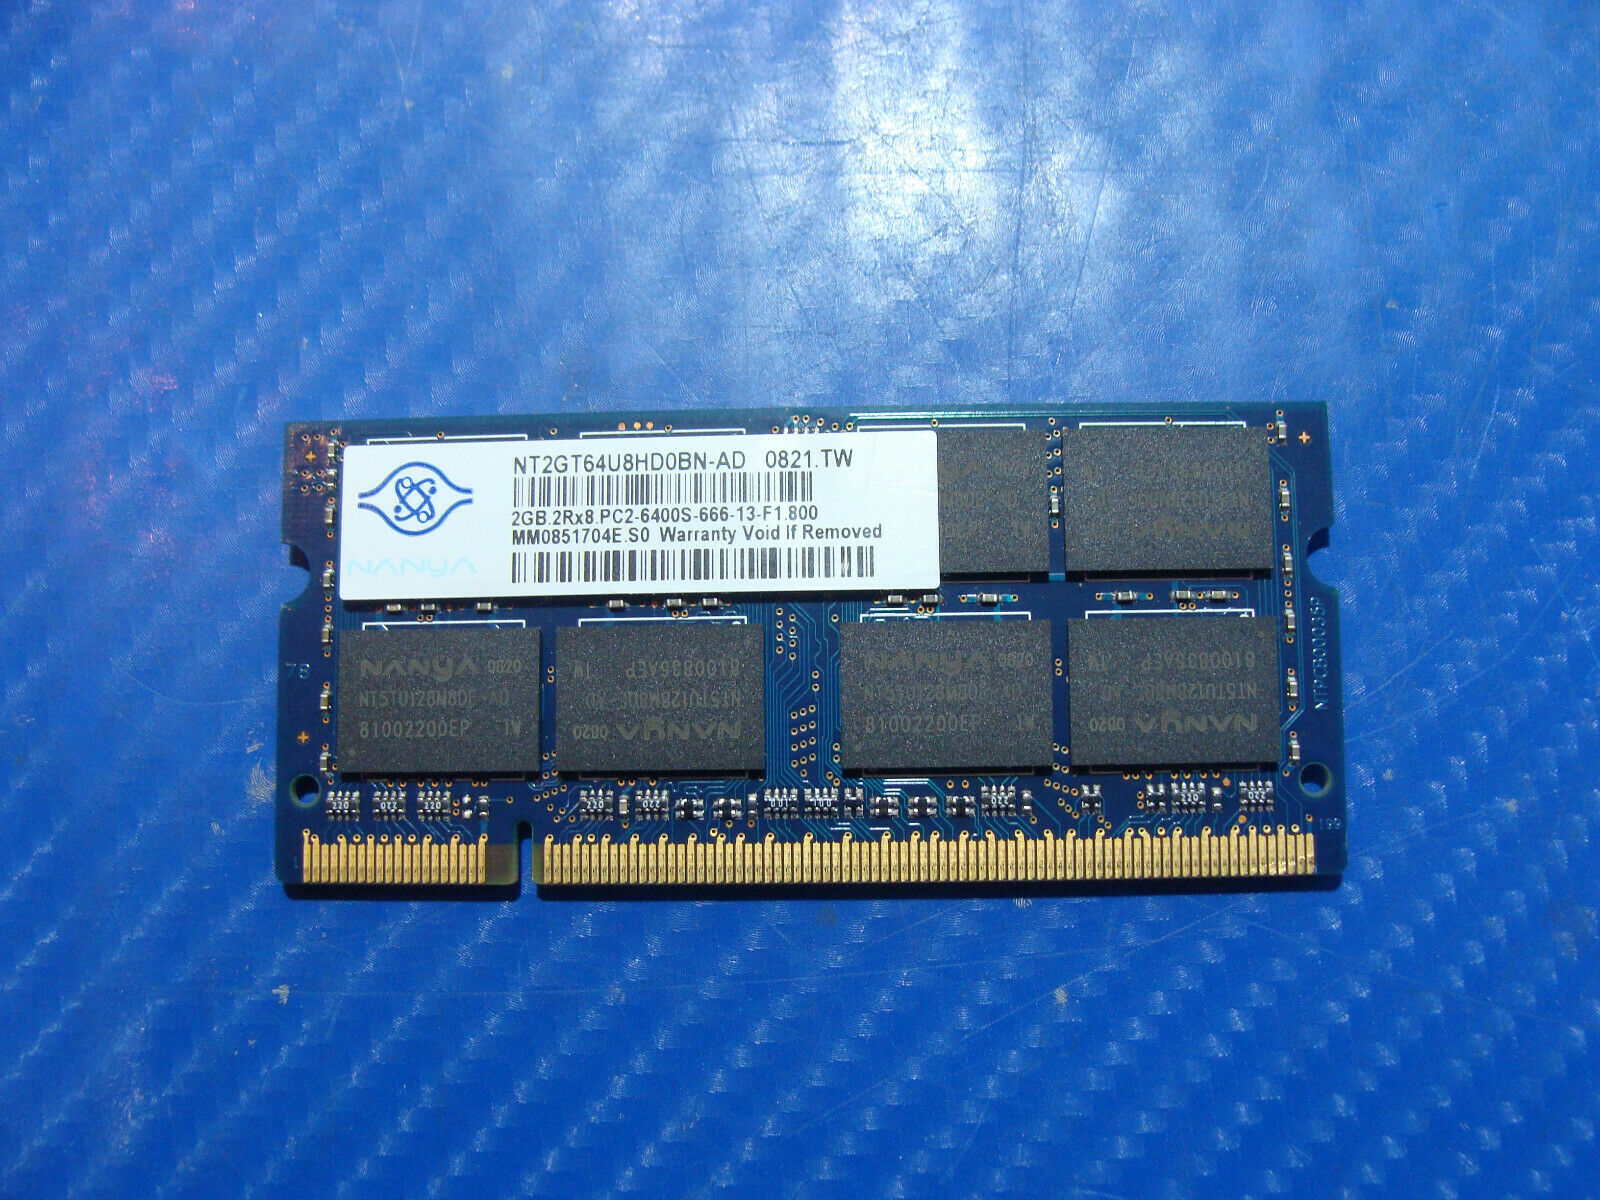 Asus G72GX Nanya Laptop 2GB 2Rx8 Memory PC2-6400S-666-13-F1 NT2GT64U8HD0BN-AD #2 Nanya